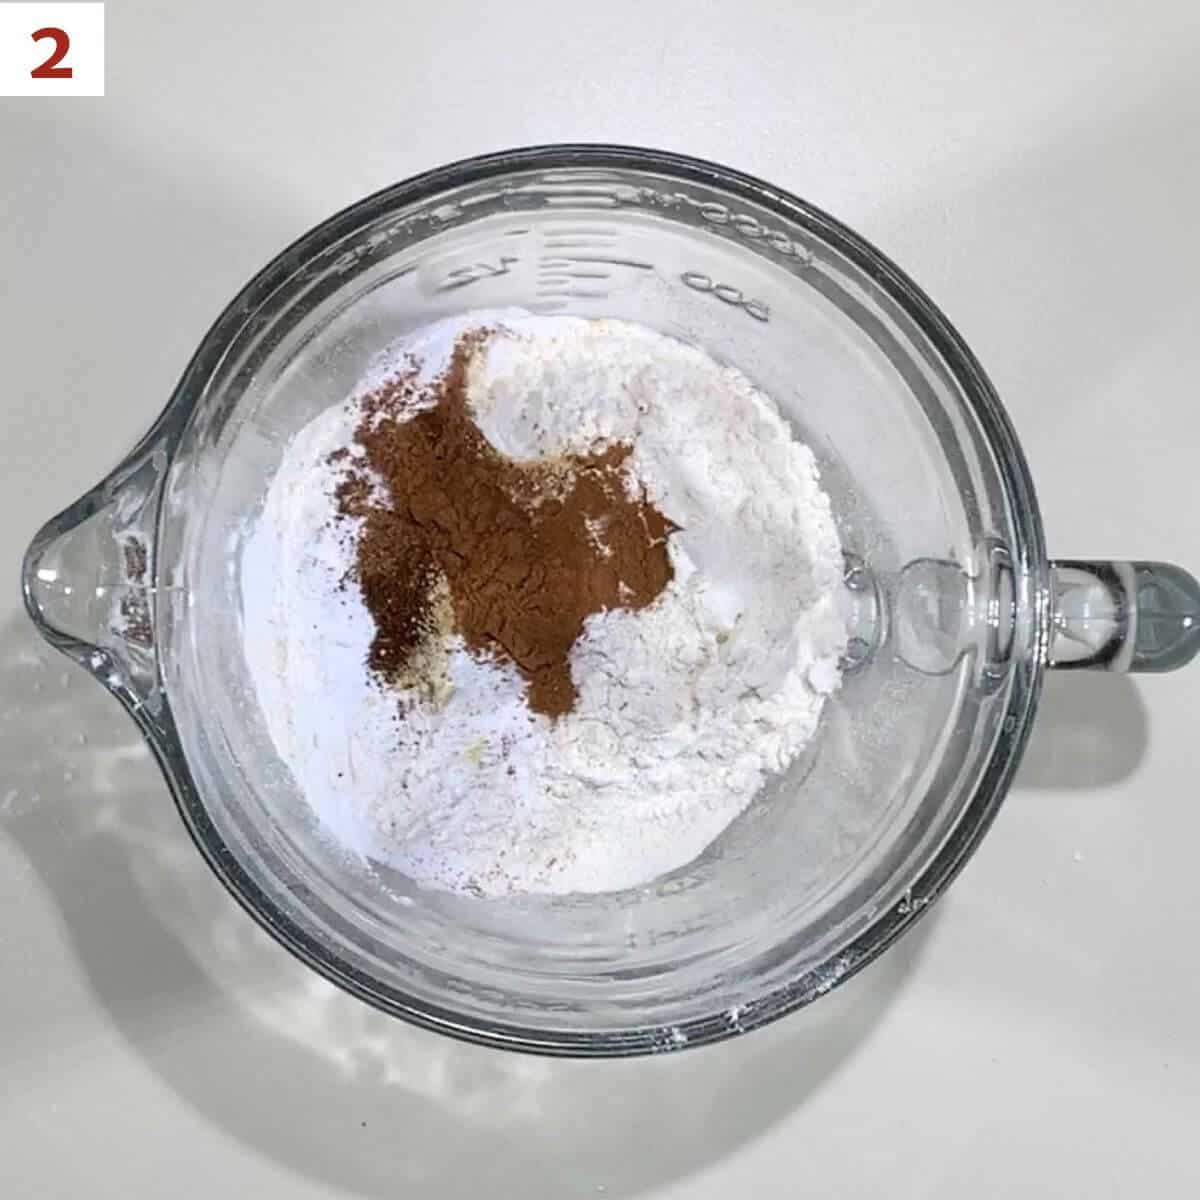 Flour, baking powder, baking soda, cinnamon, ginger, nutmeg, and cloves in a glass bowl.